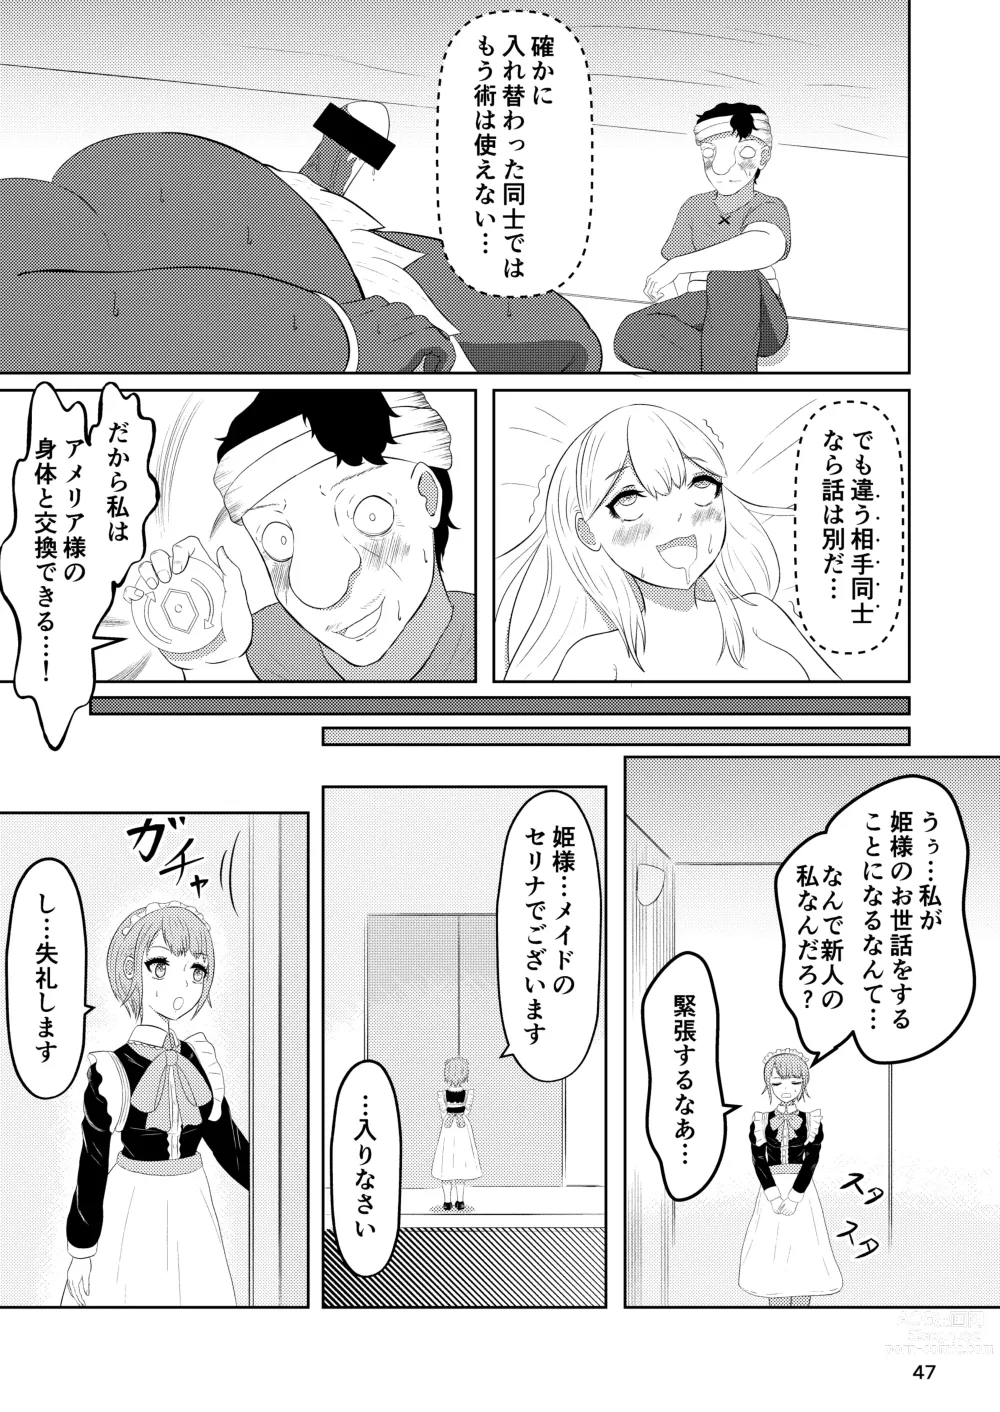 Page 46 of doujinshi Hime to Kishi  wa Nukarumi ni Kawaru